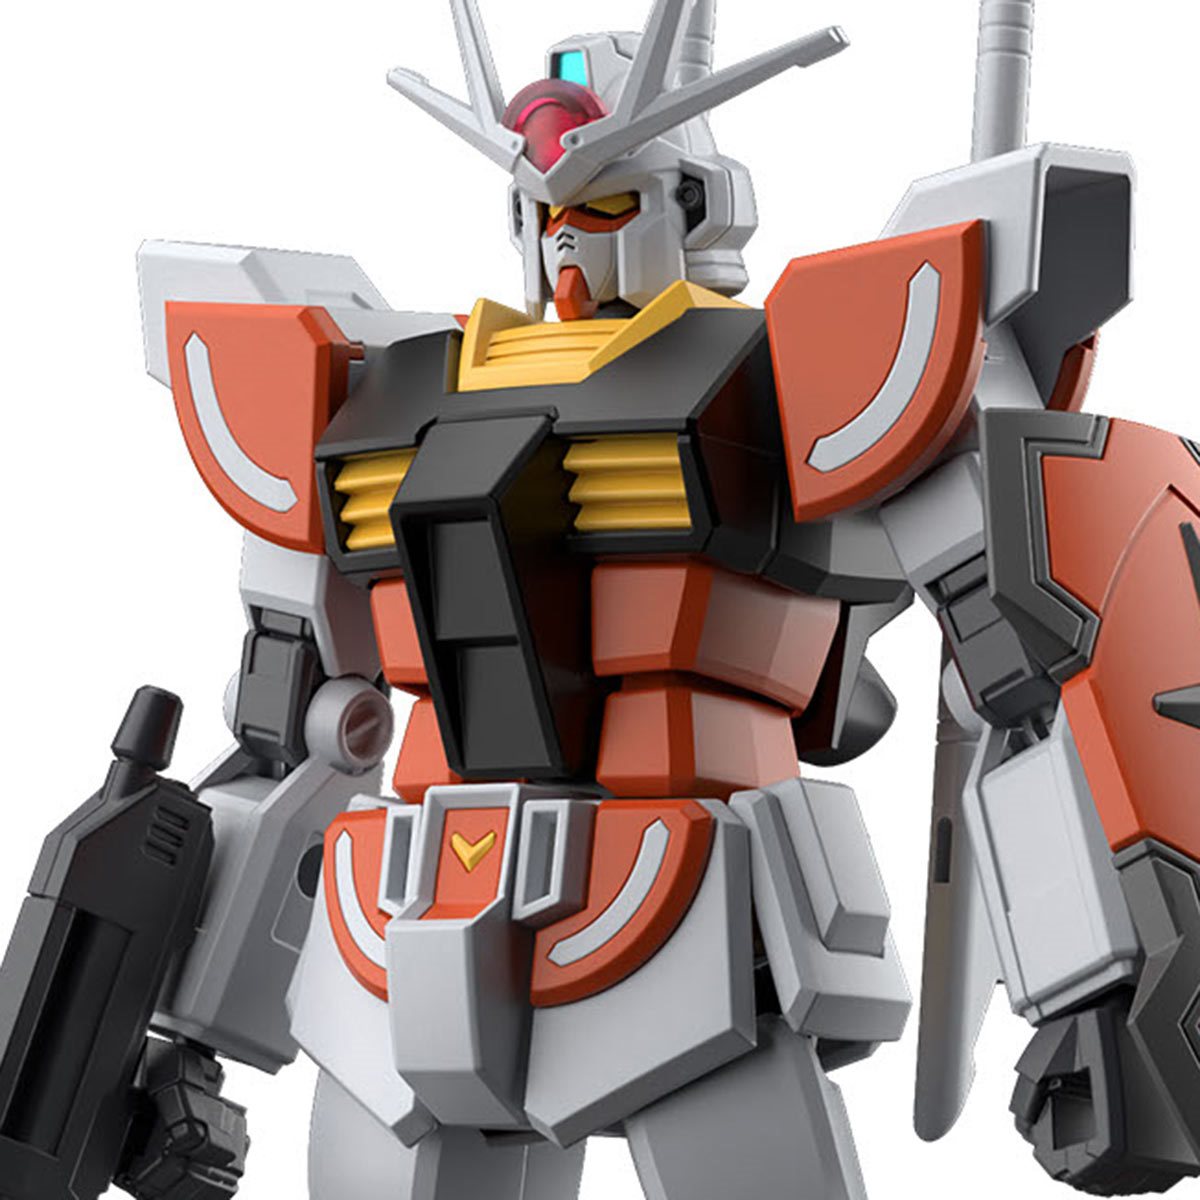 Bandai Hobby Gunpla Entry Grade Model Kit: Gundam Build Metaverse - Lah Gundam Escala 1/144 Kit De Plastico